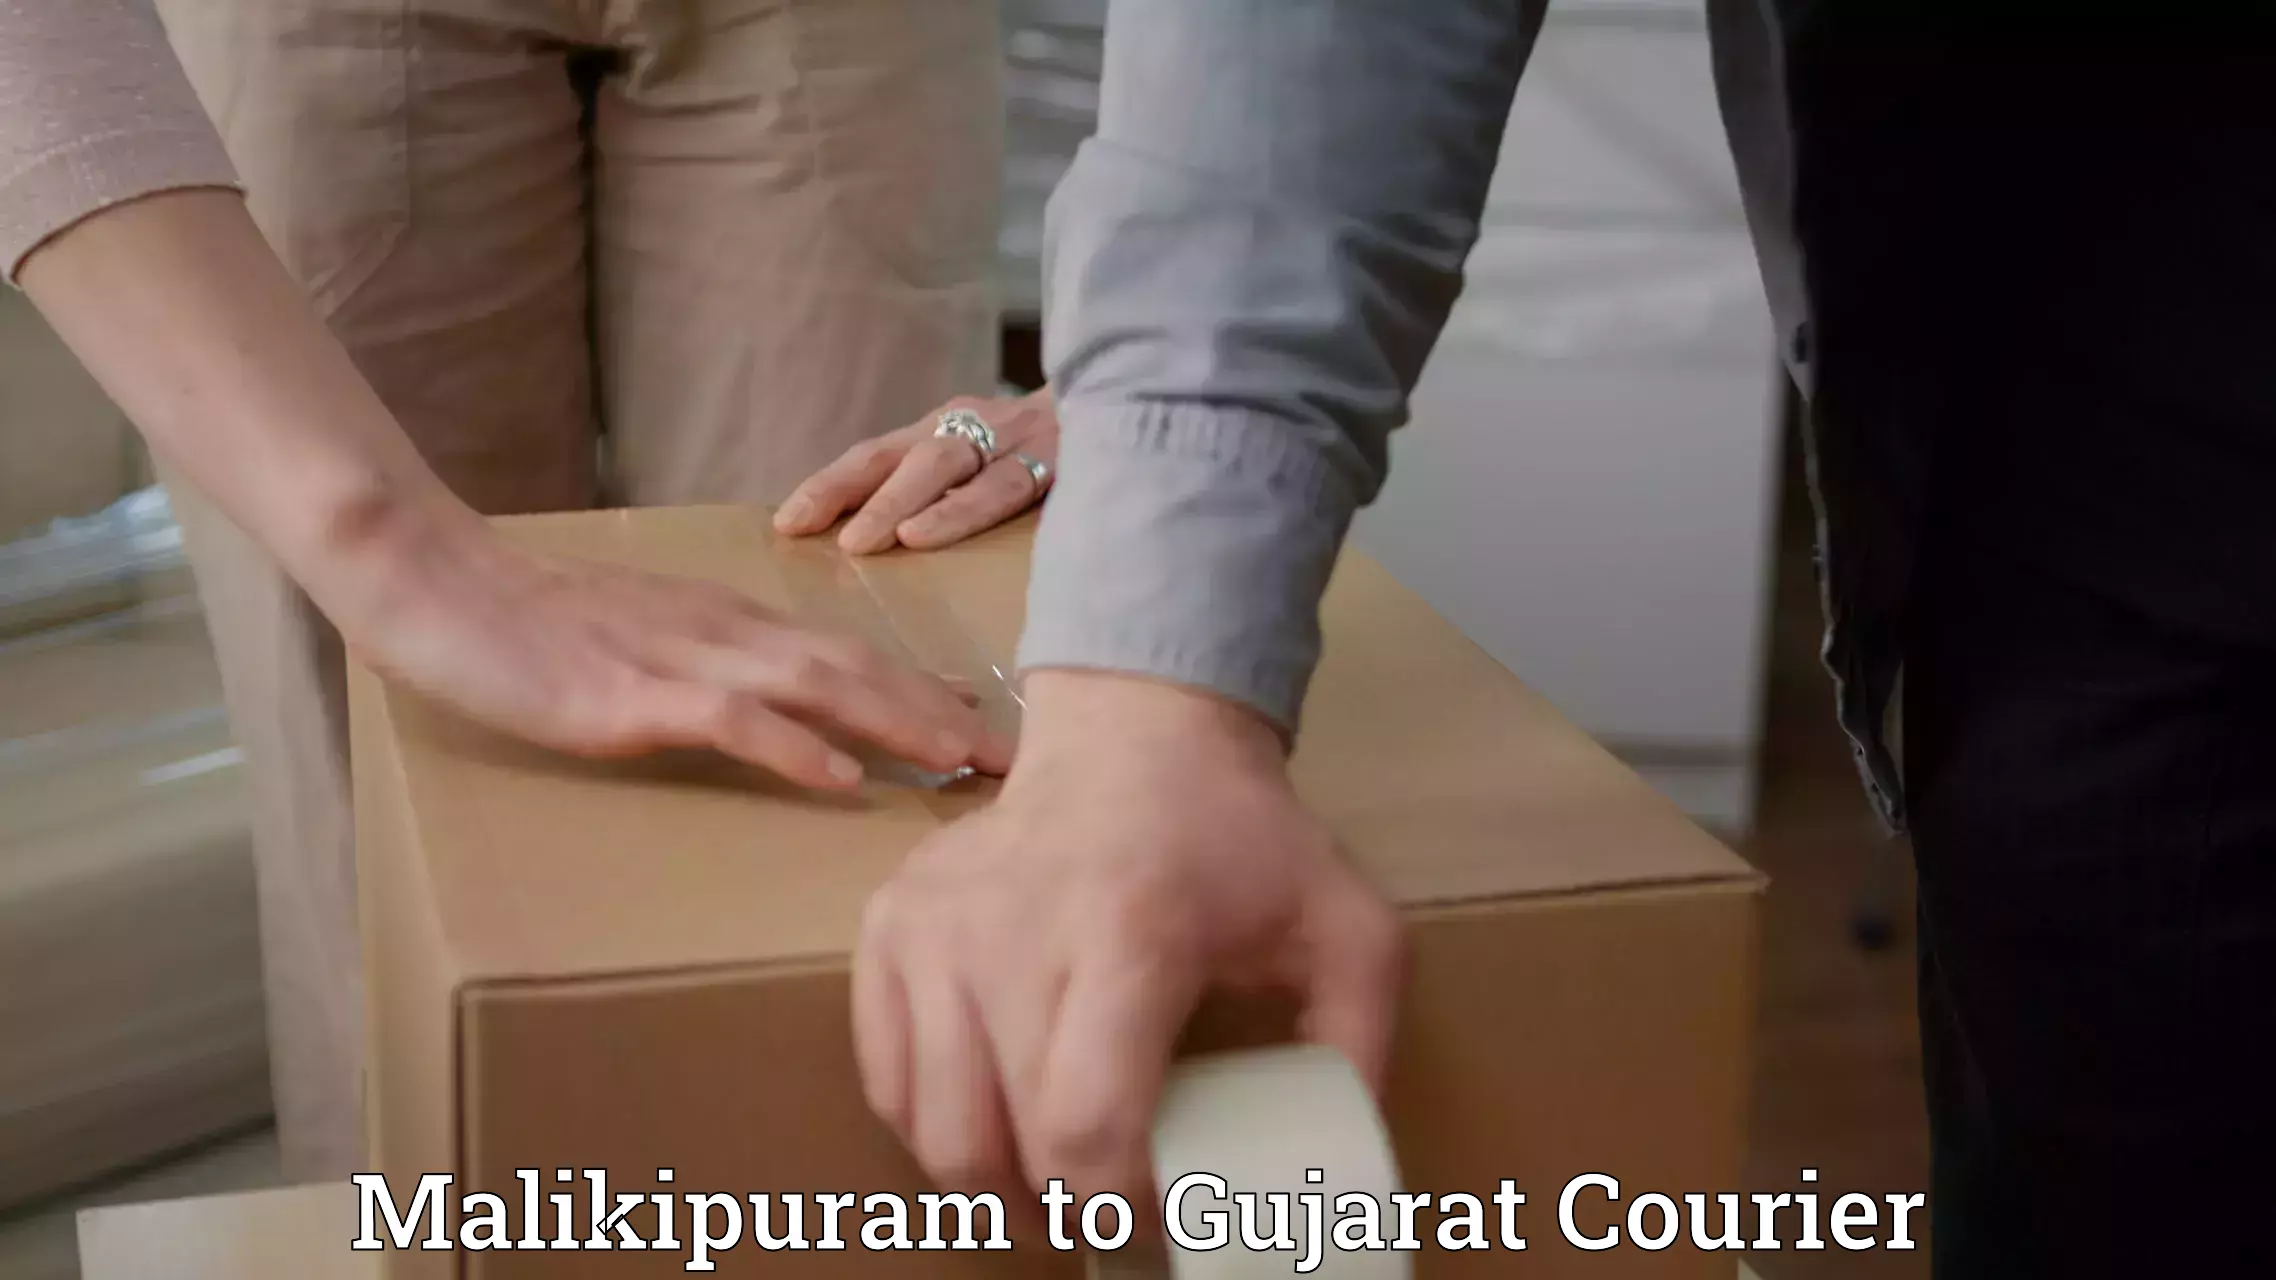 Express delivery capabilities Malikipuram to Gujarat